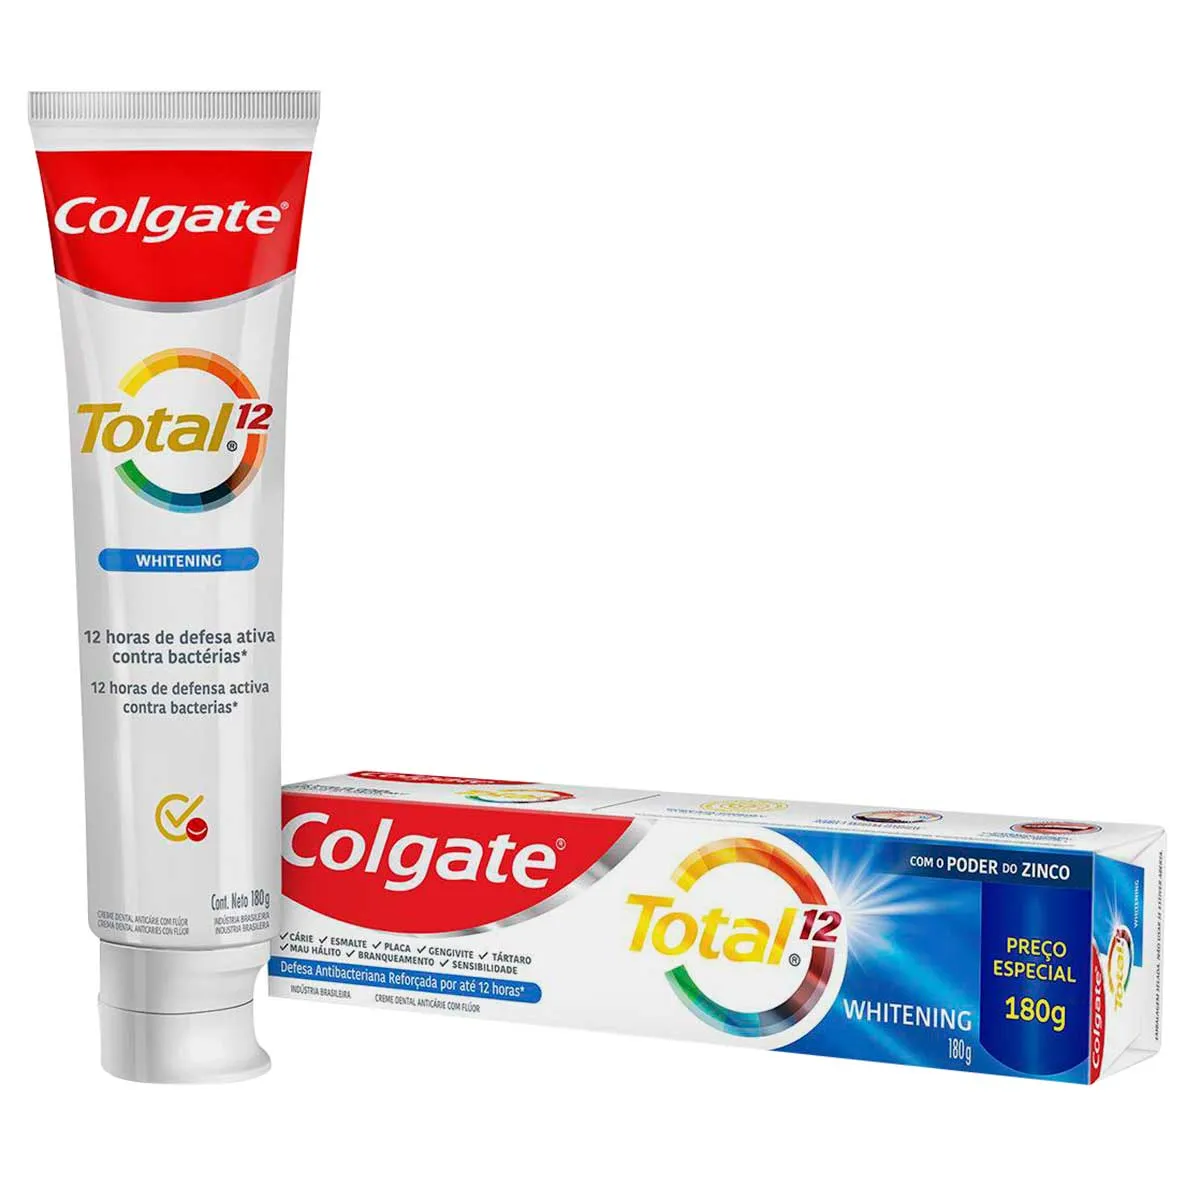 [ Regional | 60% Off 2 Unidade ] Creme Dental Colgate Total 12 Whitening 180g